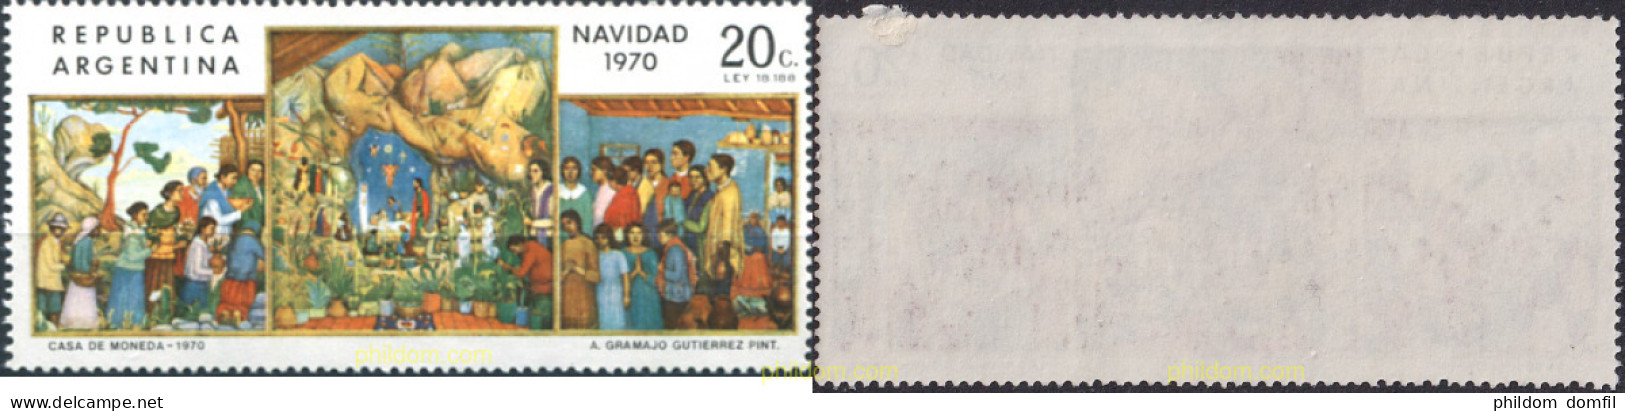 727270 MNH ARGENTINA 1970 NAVIDAD - Neufs